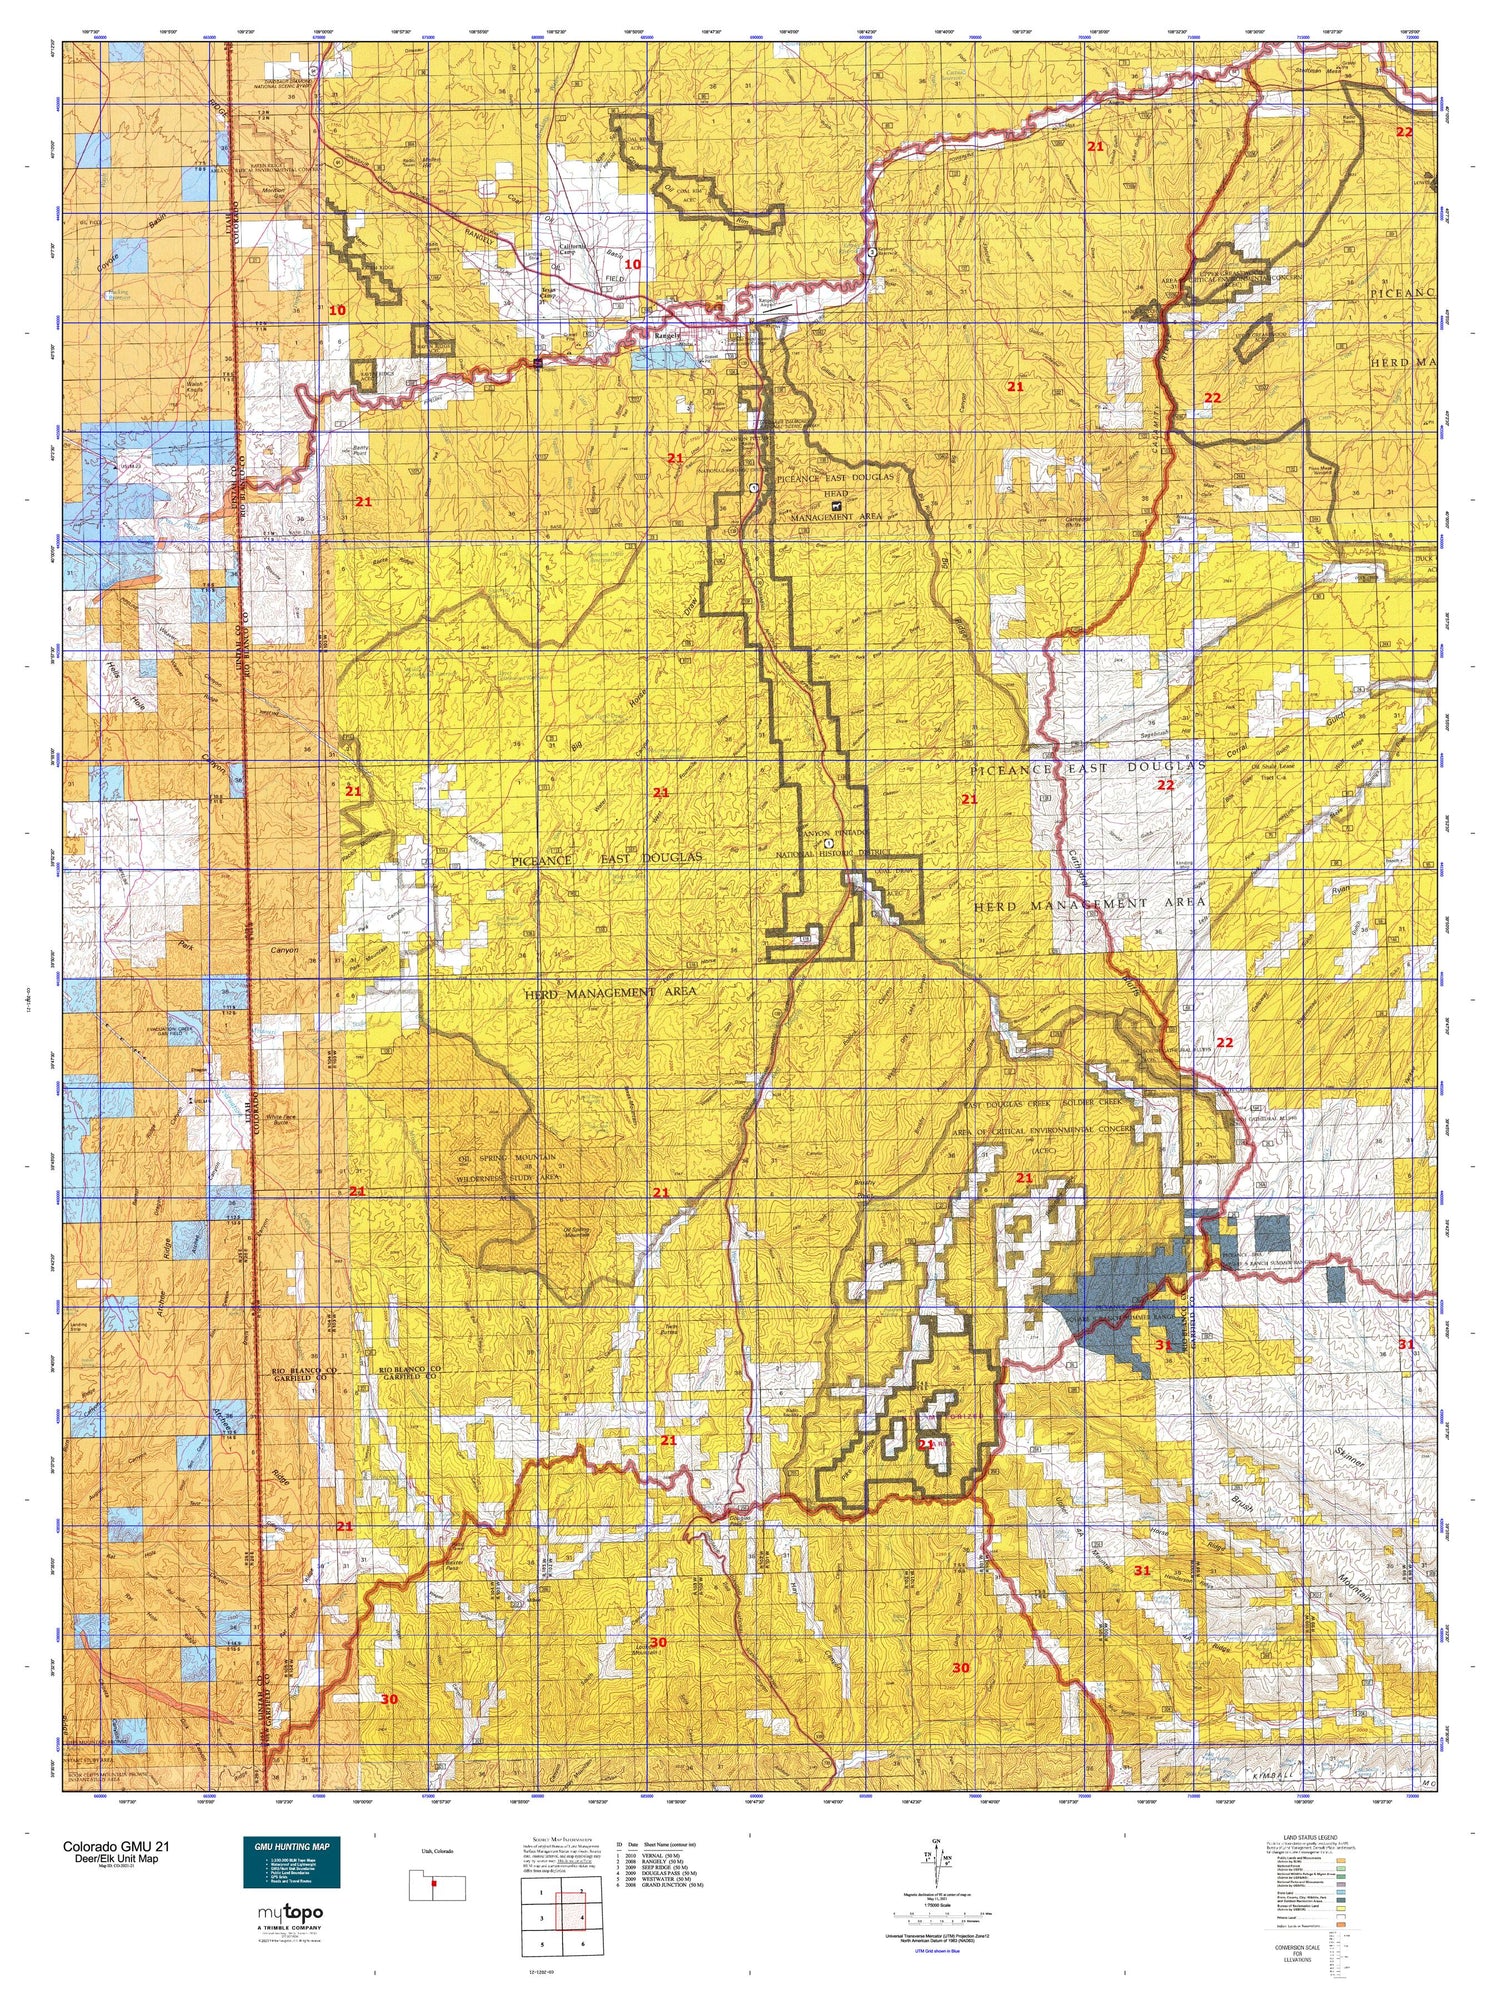 Colorado GMU 21 Map Image